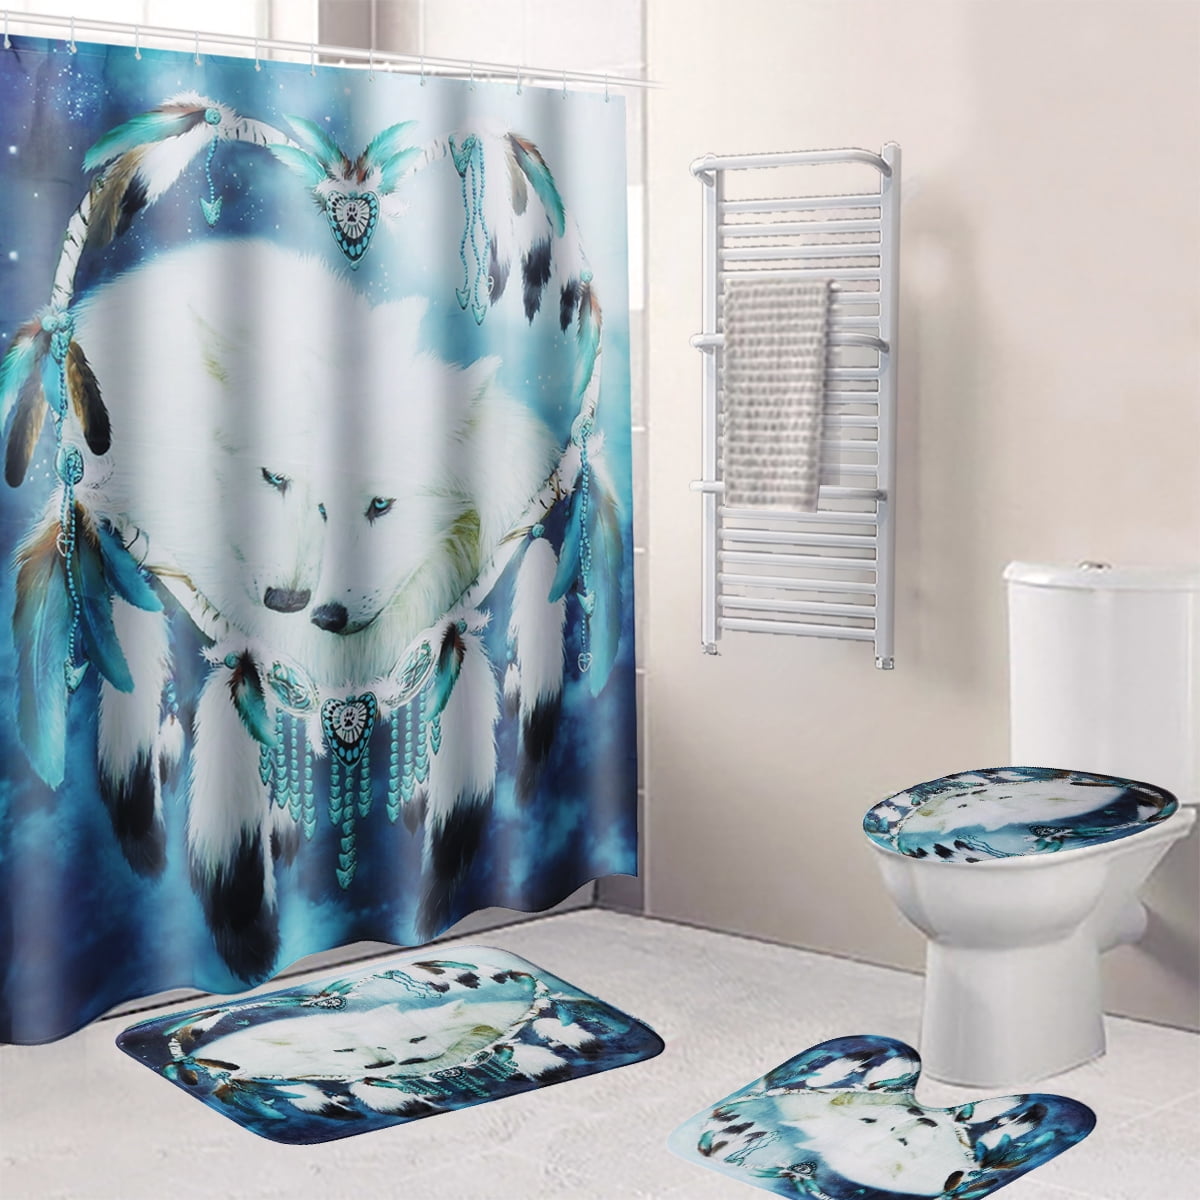 Details about   Skull Waterproof Shower Curtain Bathroom Non-Slip Toilet Cover Mat Rug Se 